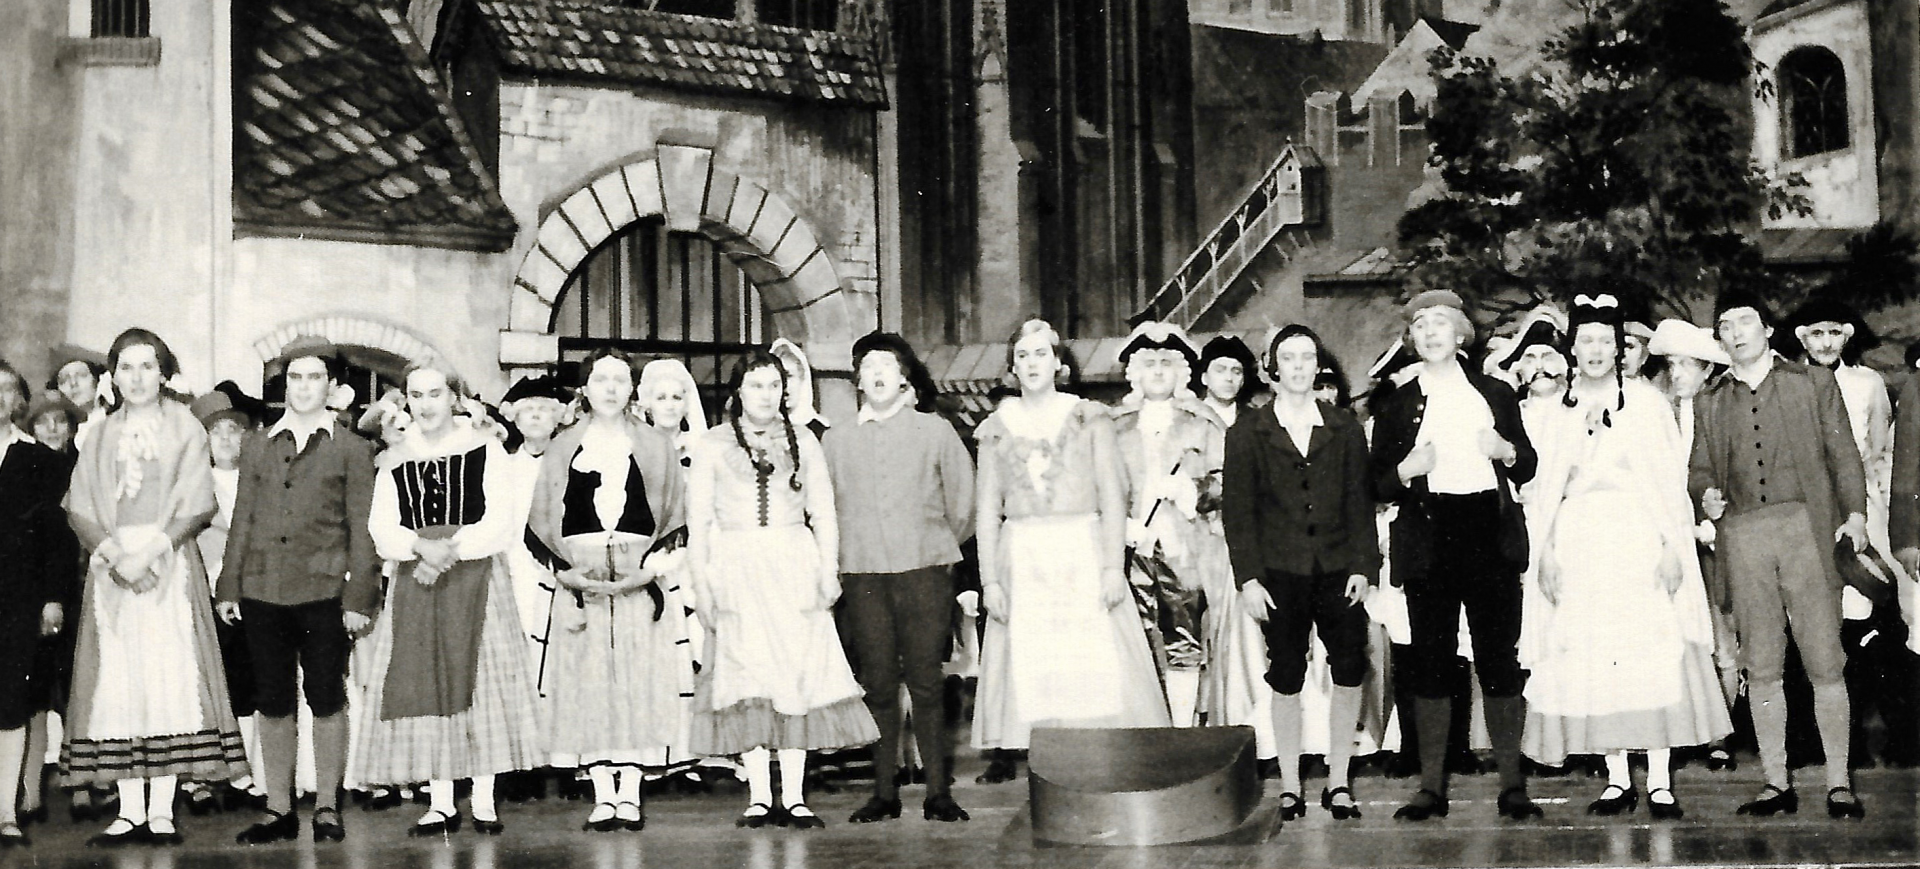 En dr Kayas Nummer Null - Divertissementchen 1963 - Großer Chor im Szenenbild